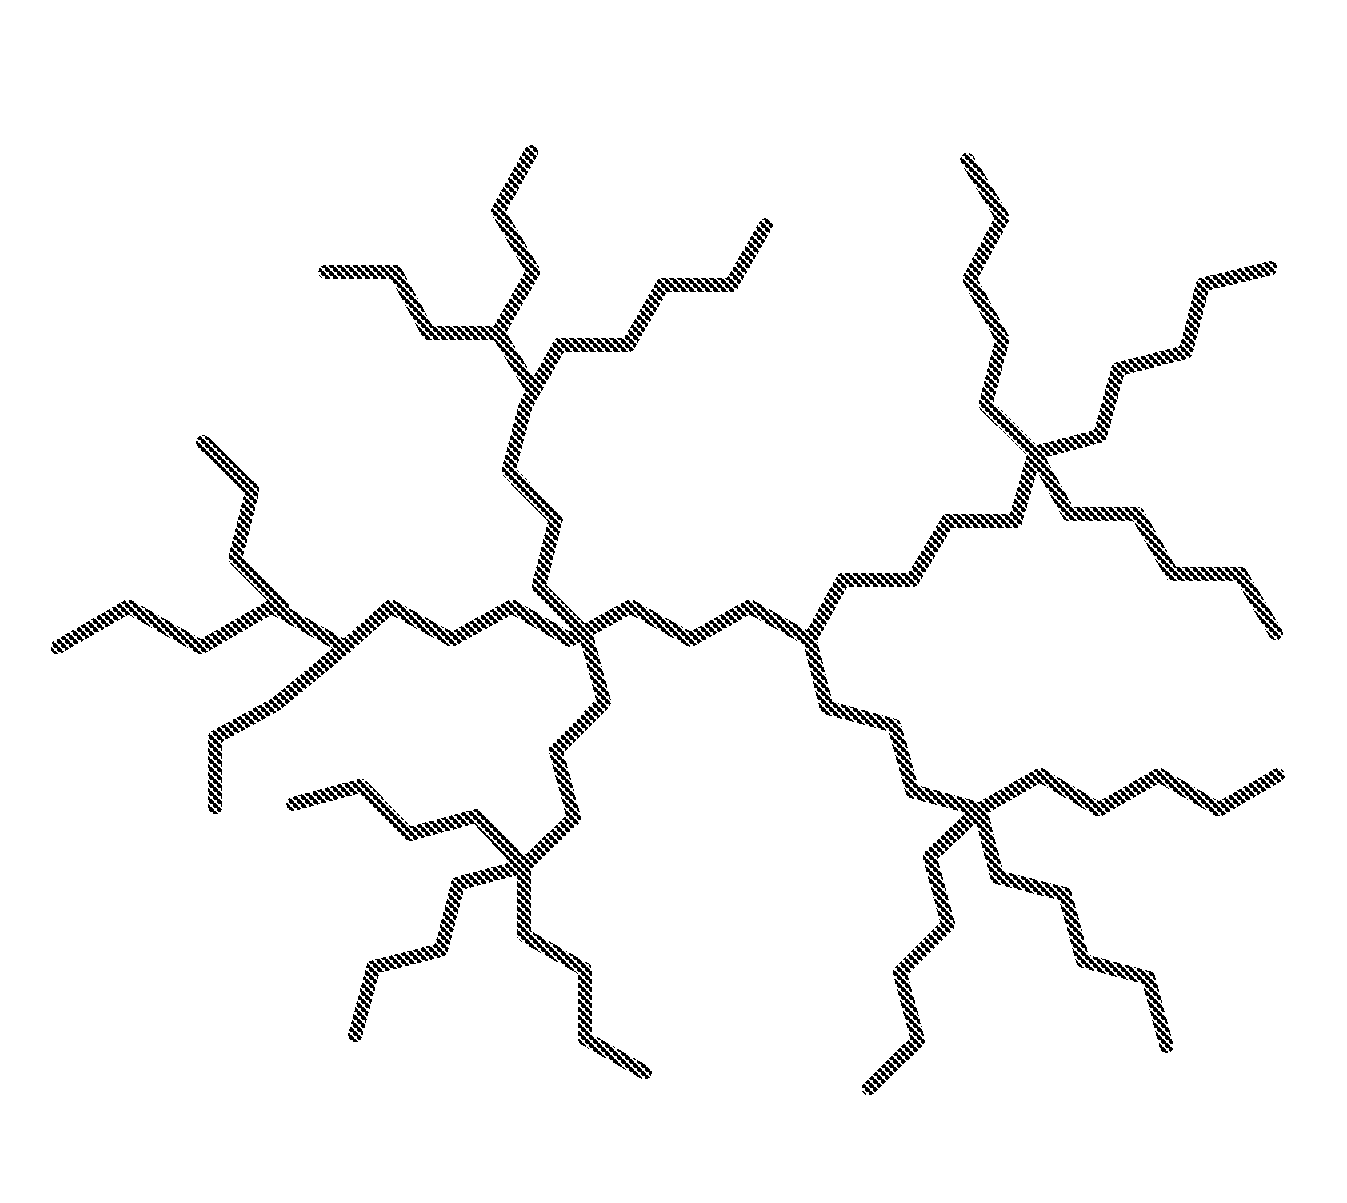 Copolymer surfactants